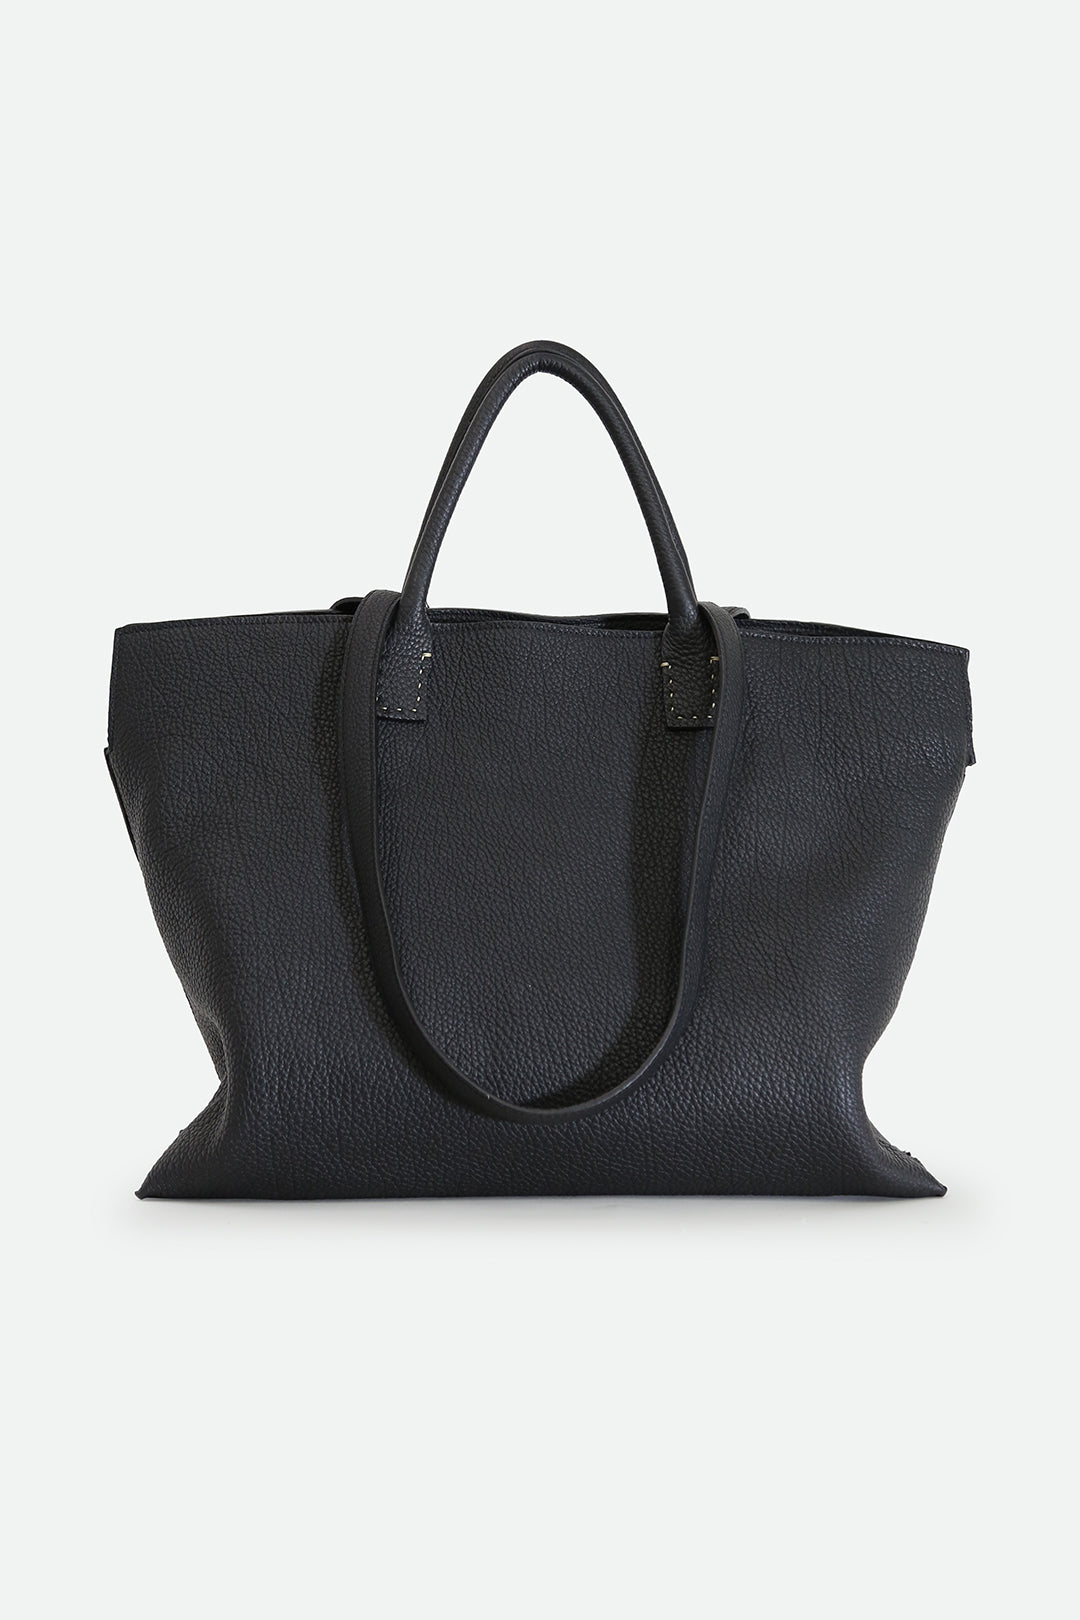 Bolzano Italian Leather Large Handbag Black